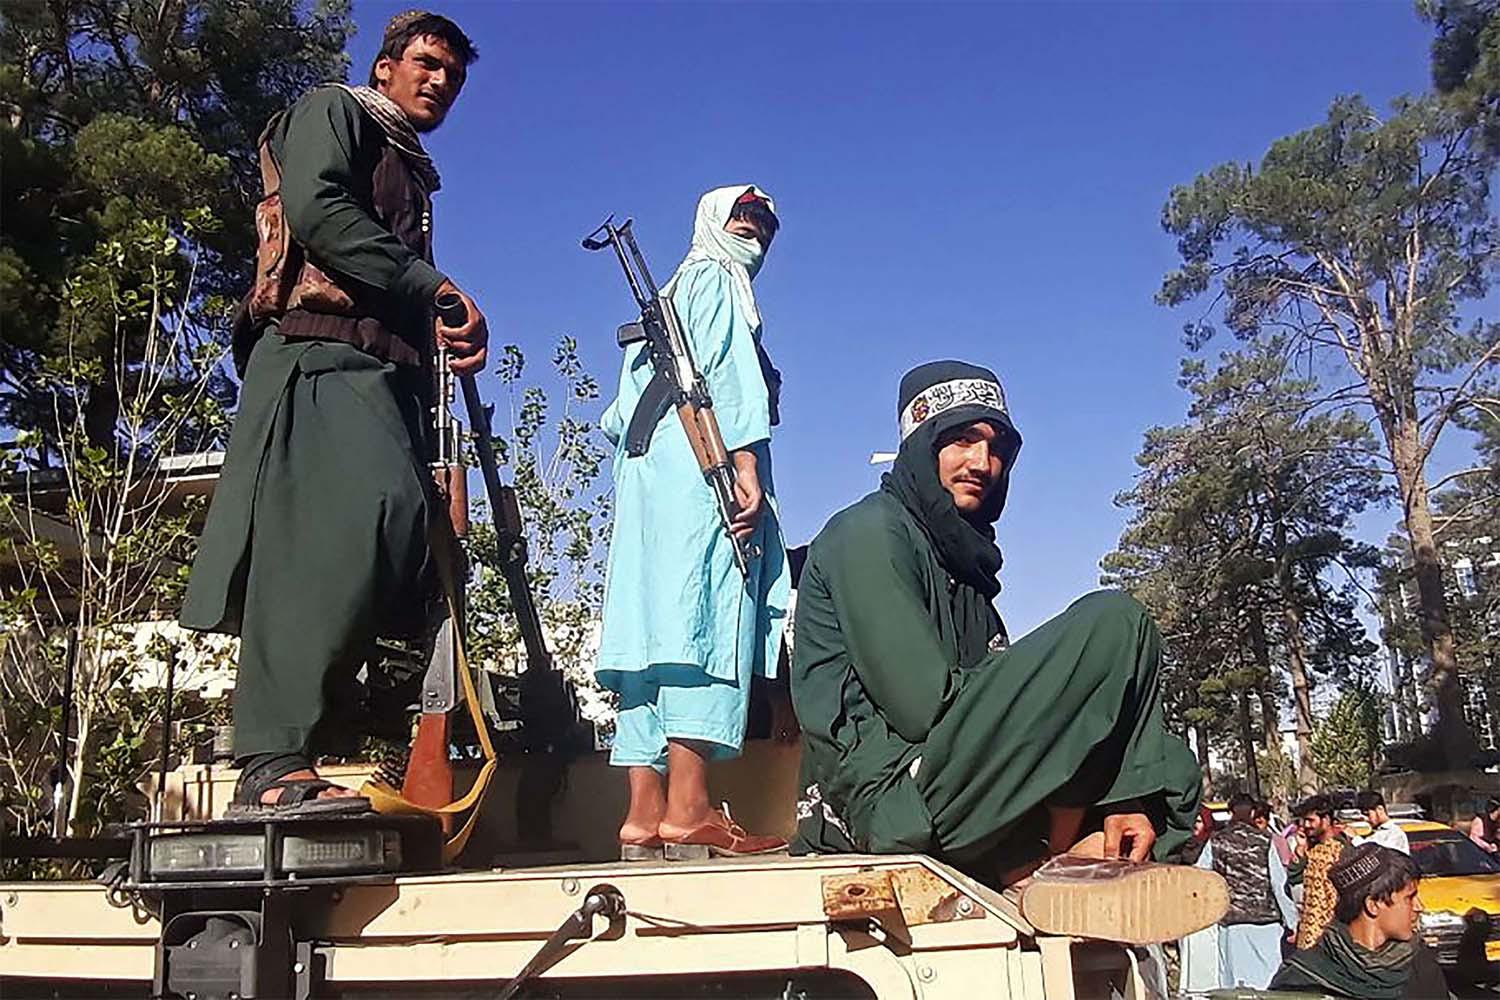 Taliban fighters